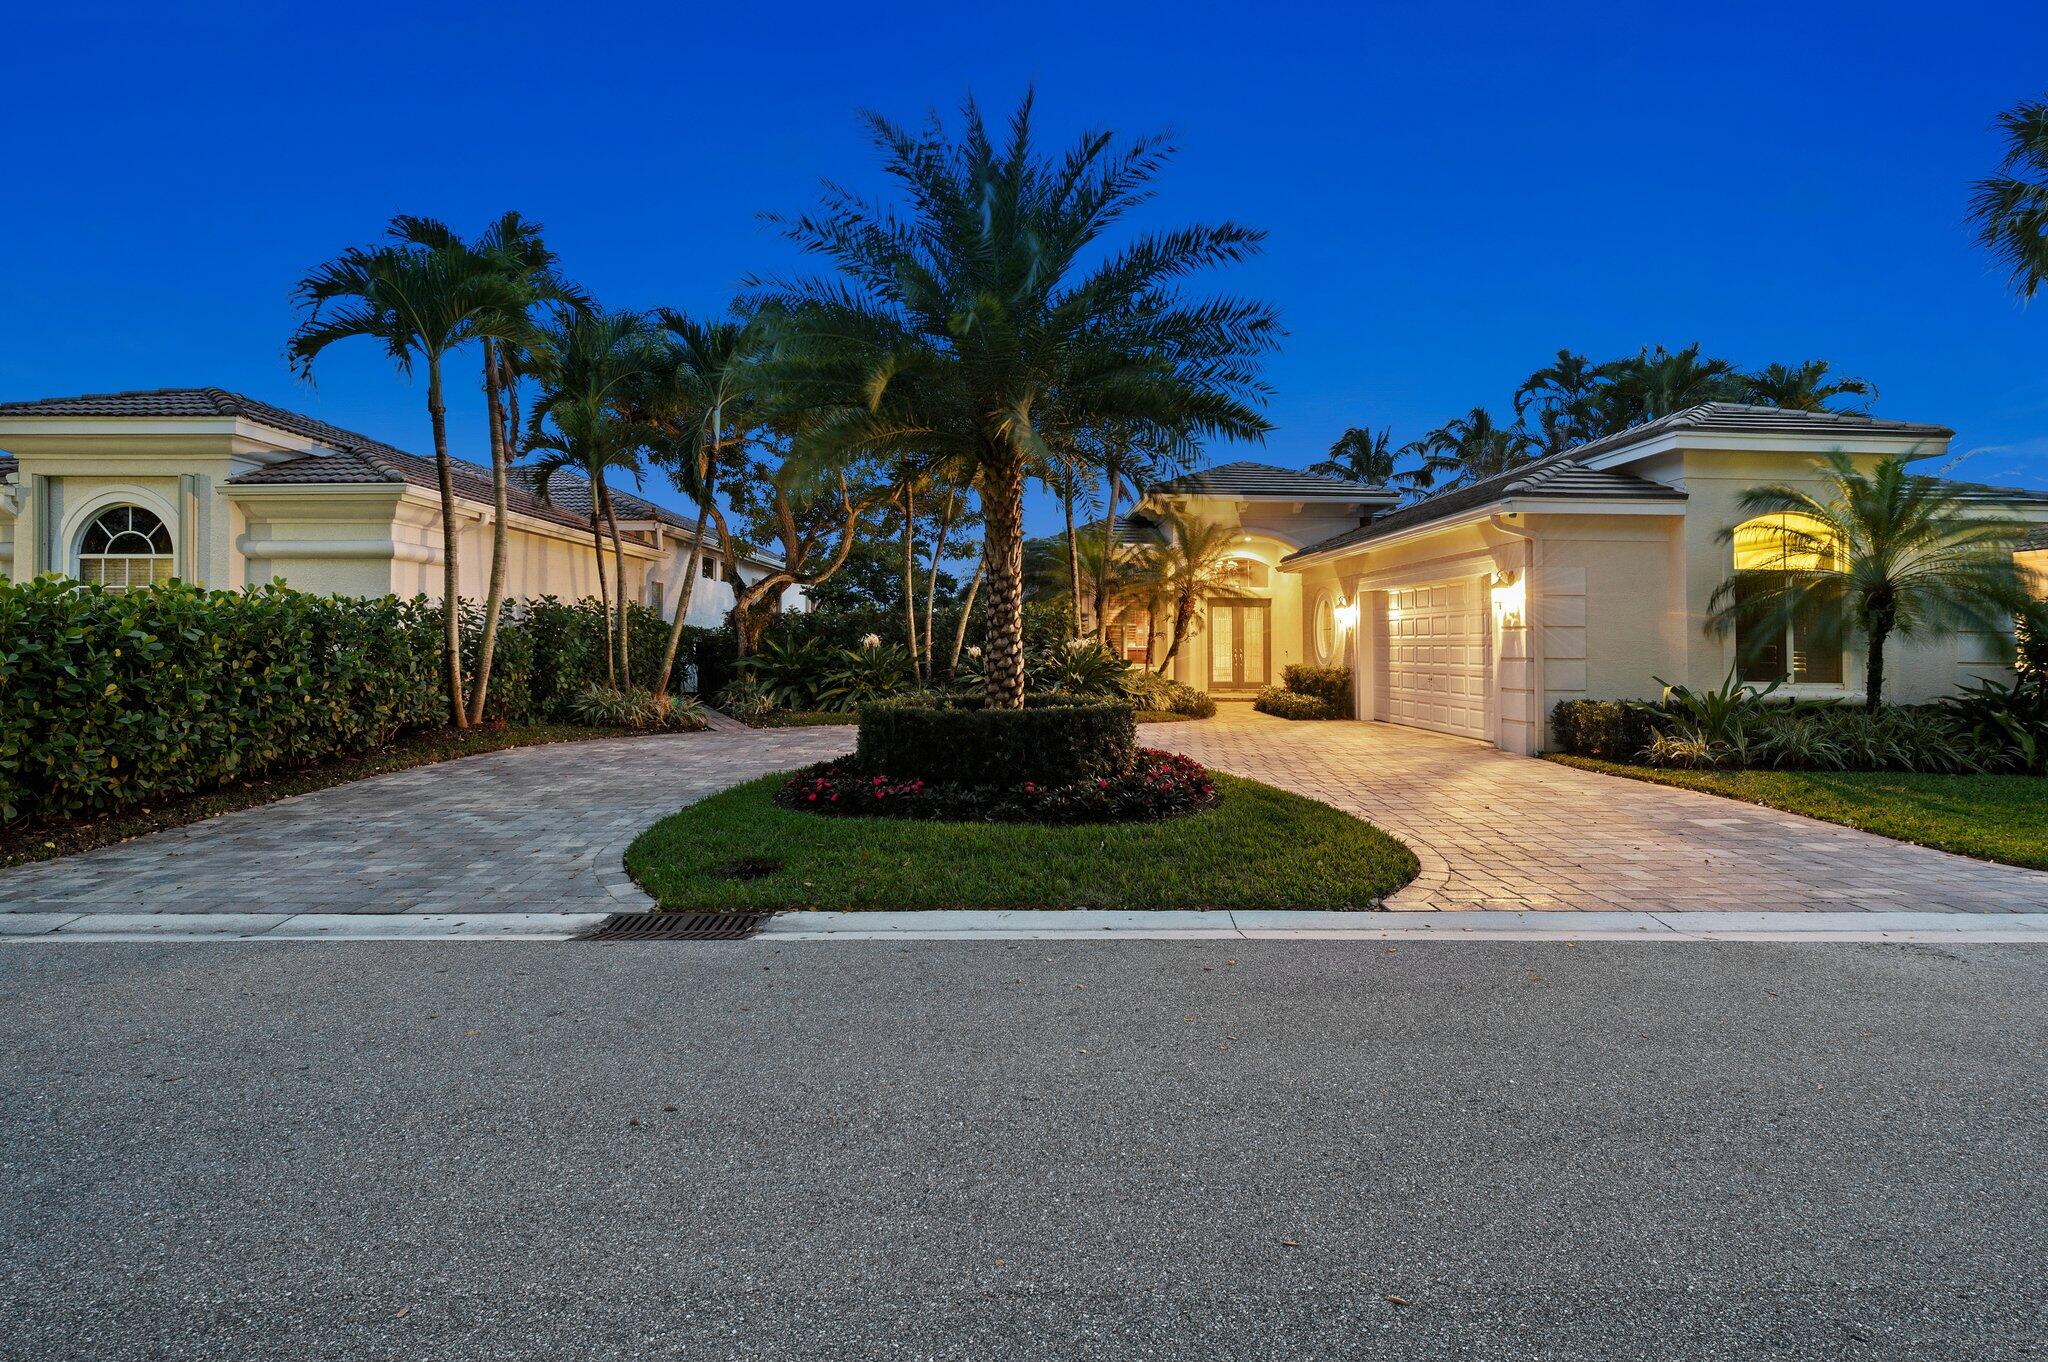 Property for Sale at 7814 Villa D Este Way, Delray Beach, Palm Beach County, Florida - Bedrooms: 3 
Bathrooms: 3.5  - $1,475,000